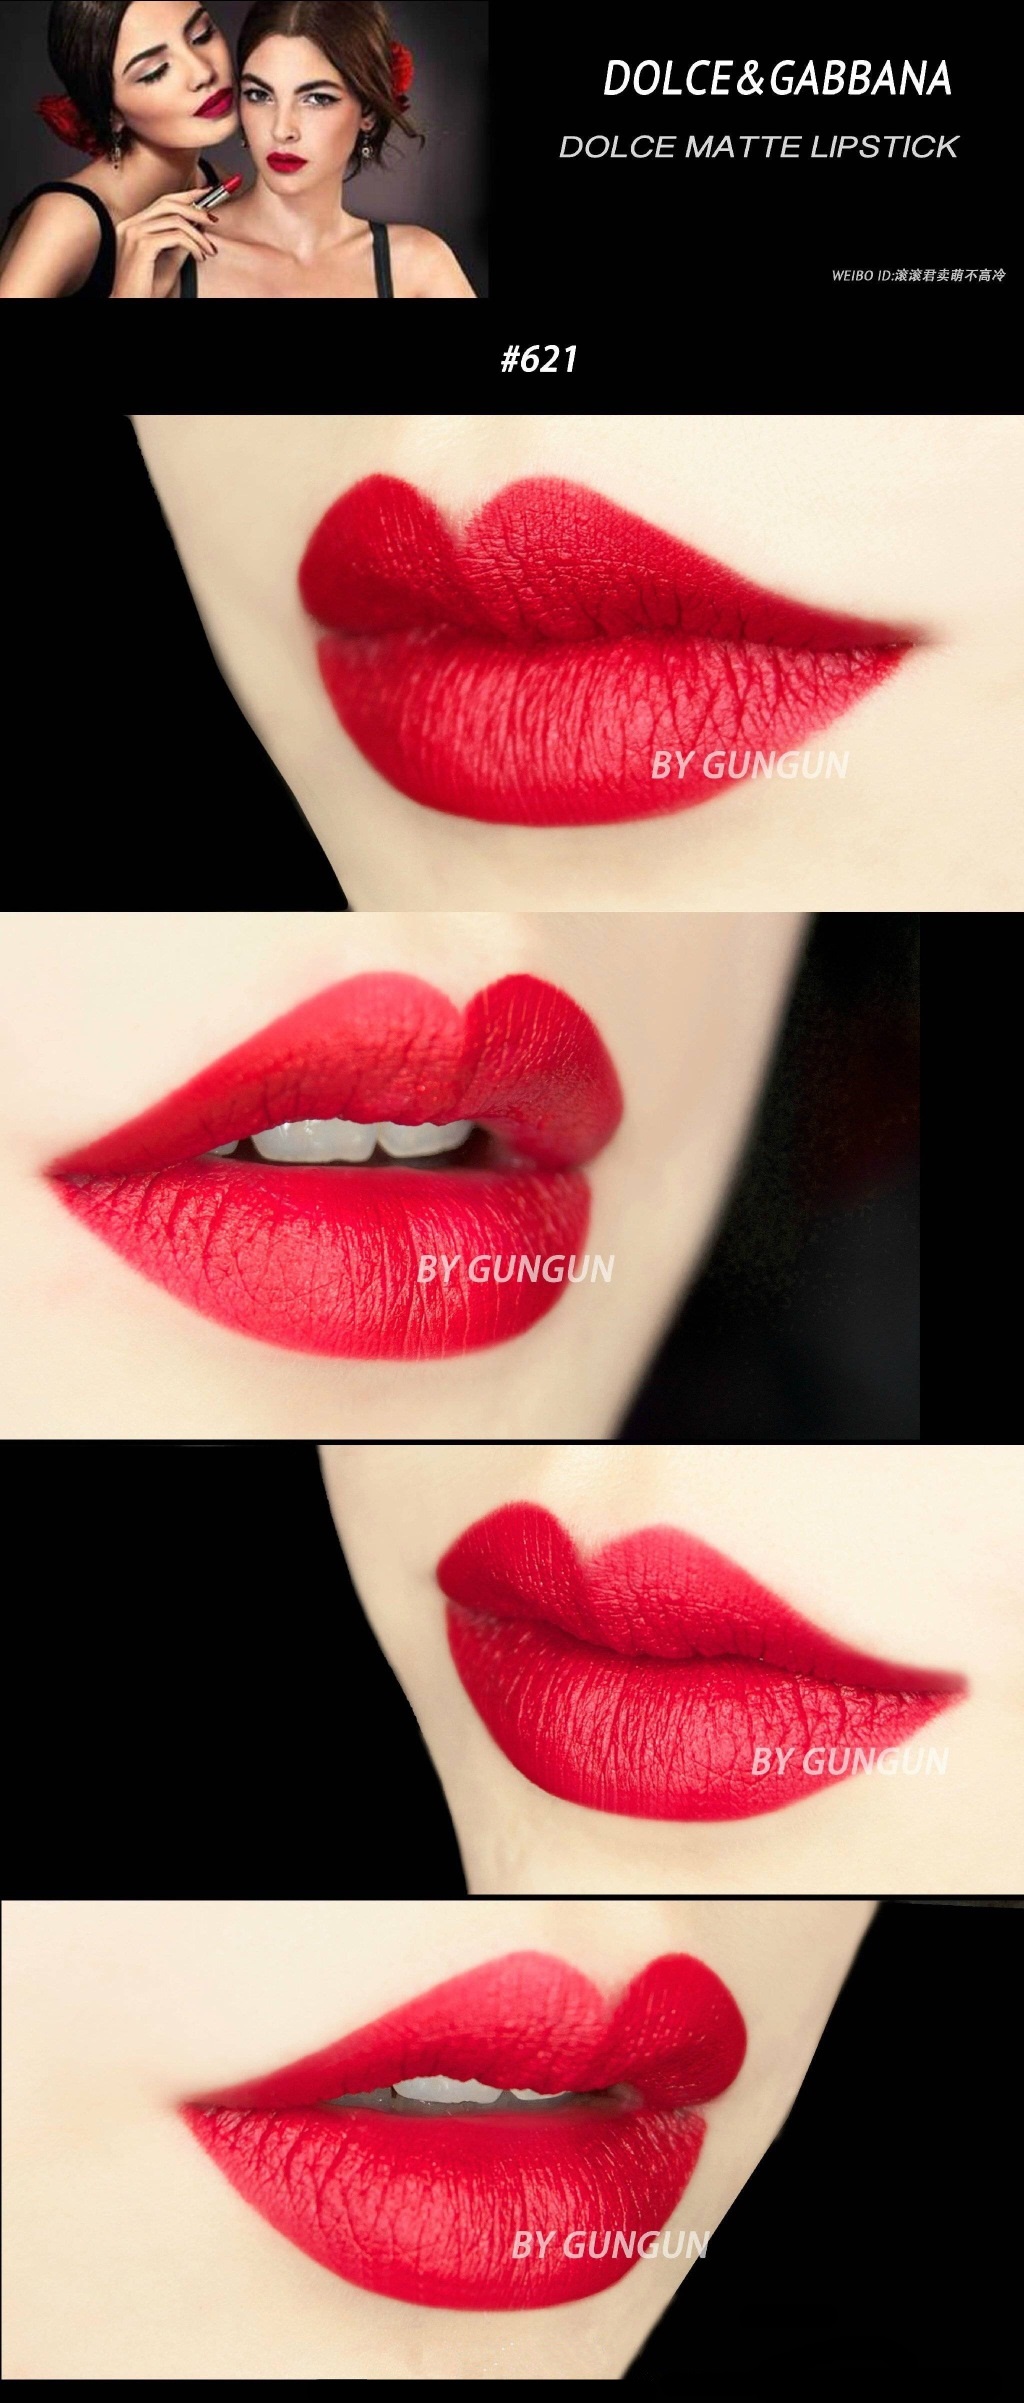 Dolce&Gabbana 杜嘉班纳唇膏dolce matte lipstick 621/531/642/624/629/643/644试色